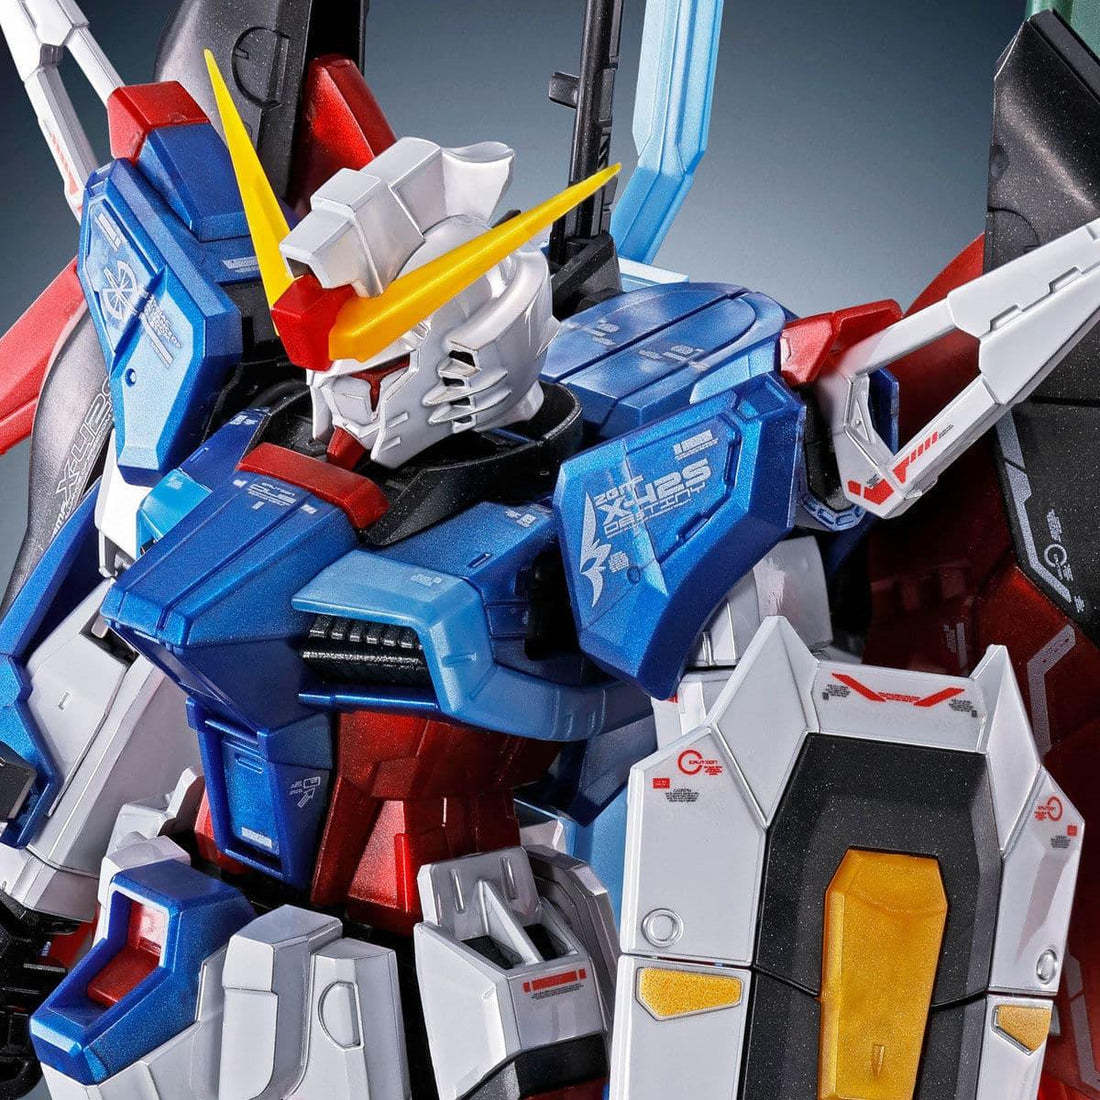 RG Destiny Gundam (Titanium Finish) - Gundam Extra-Your BEST Gunpla Supplier